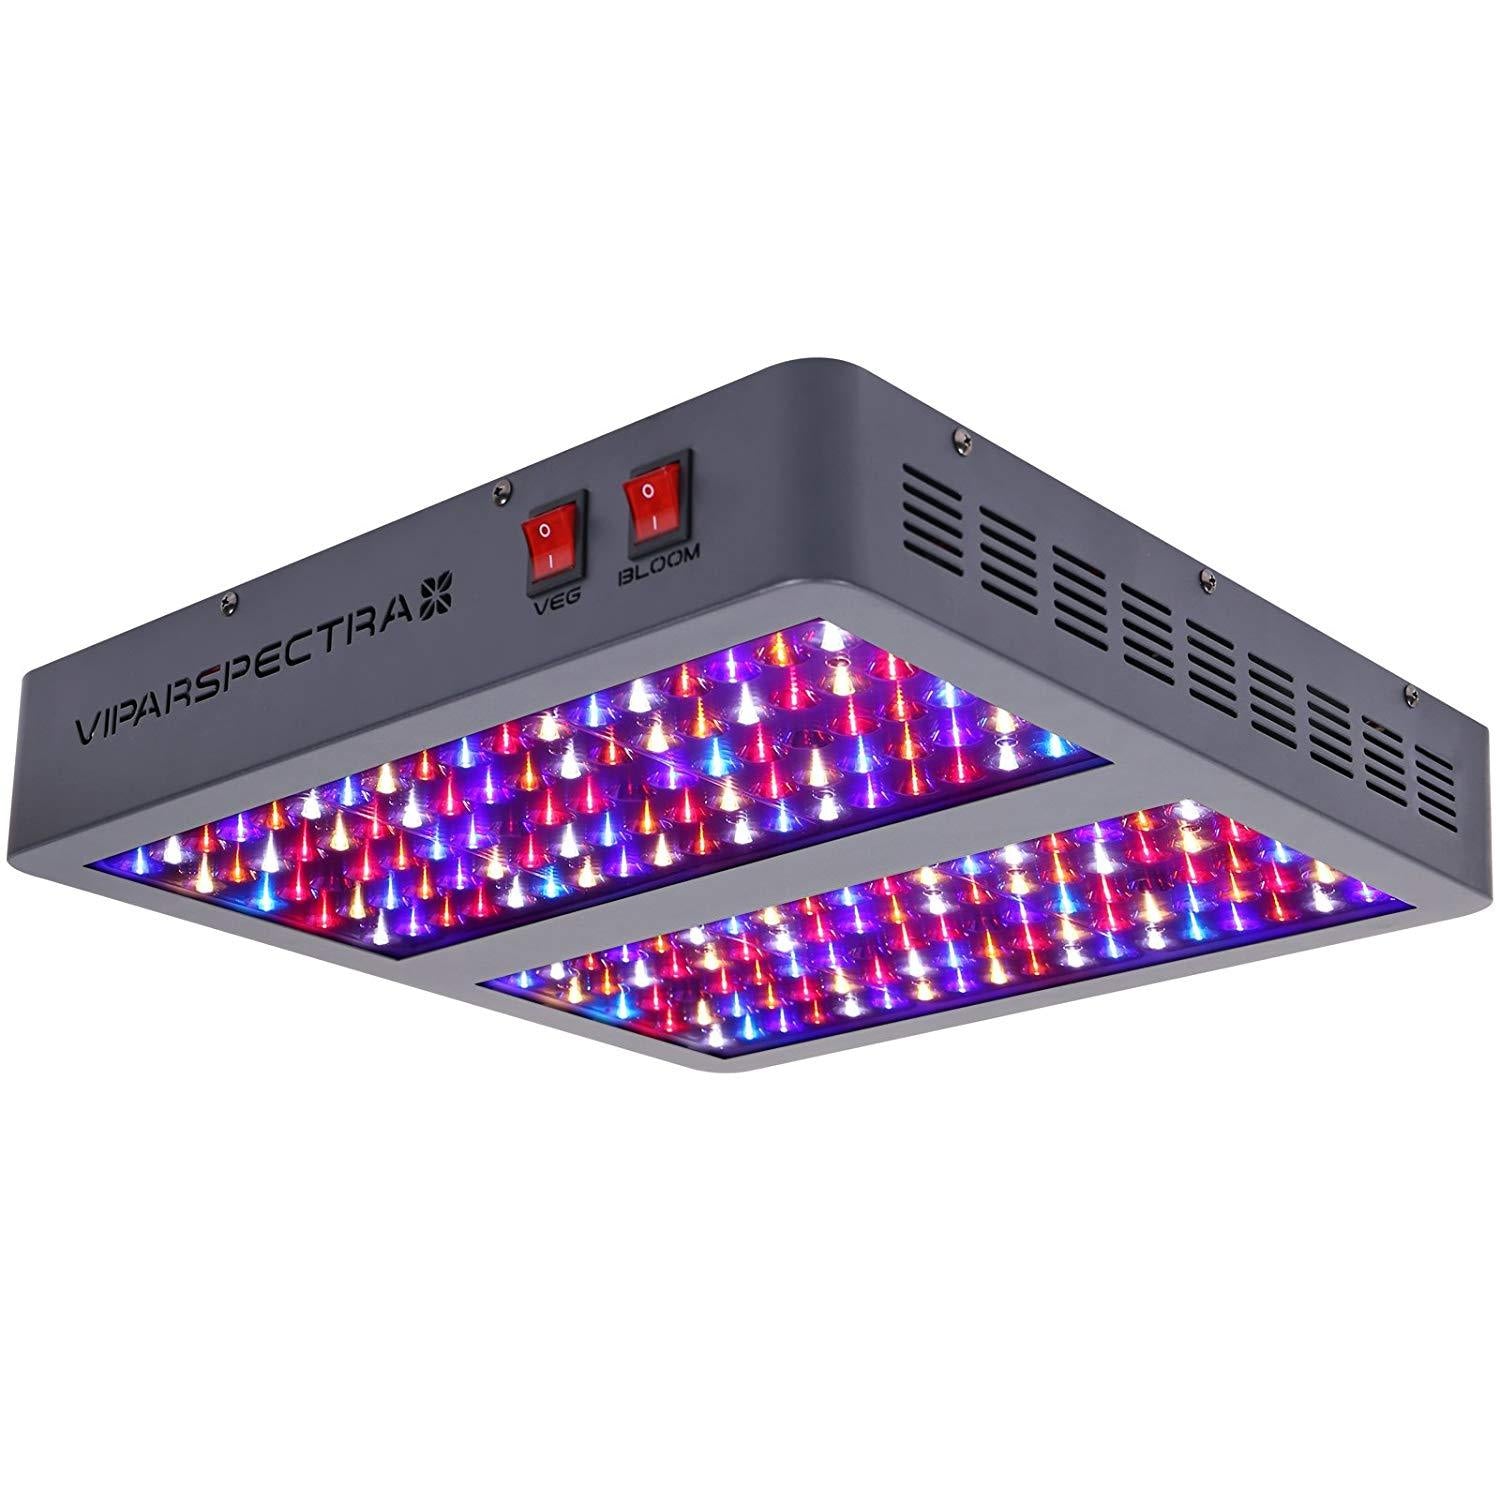 VIPARSPECTRA 900W LED Grow Light Full Spectrum for Indoor Plants 